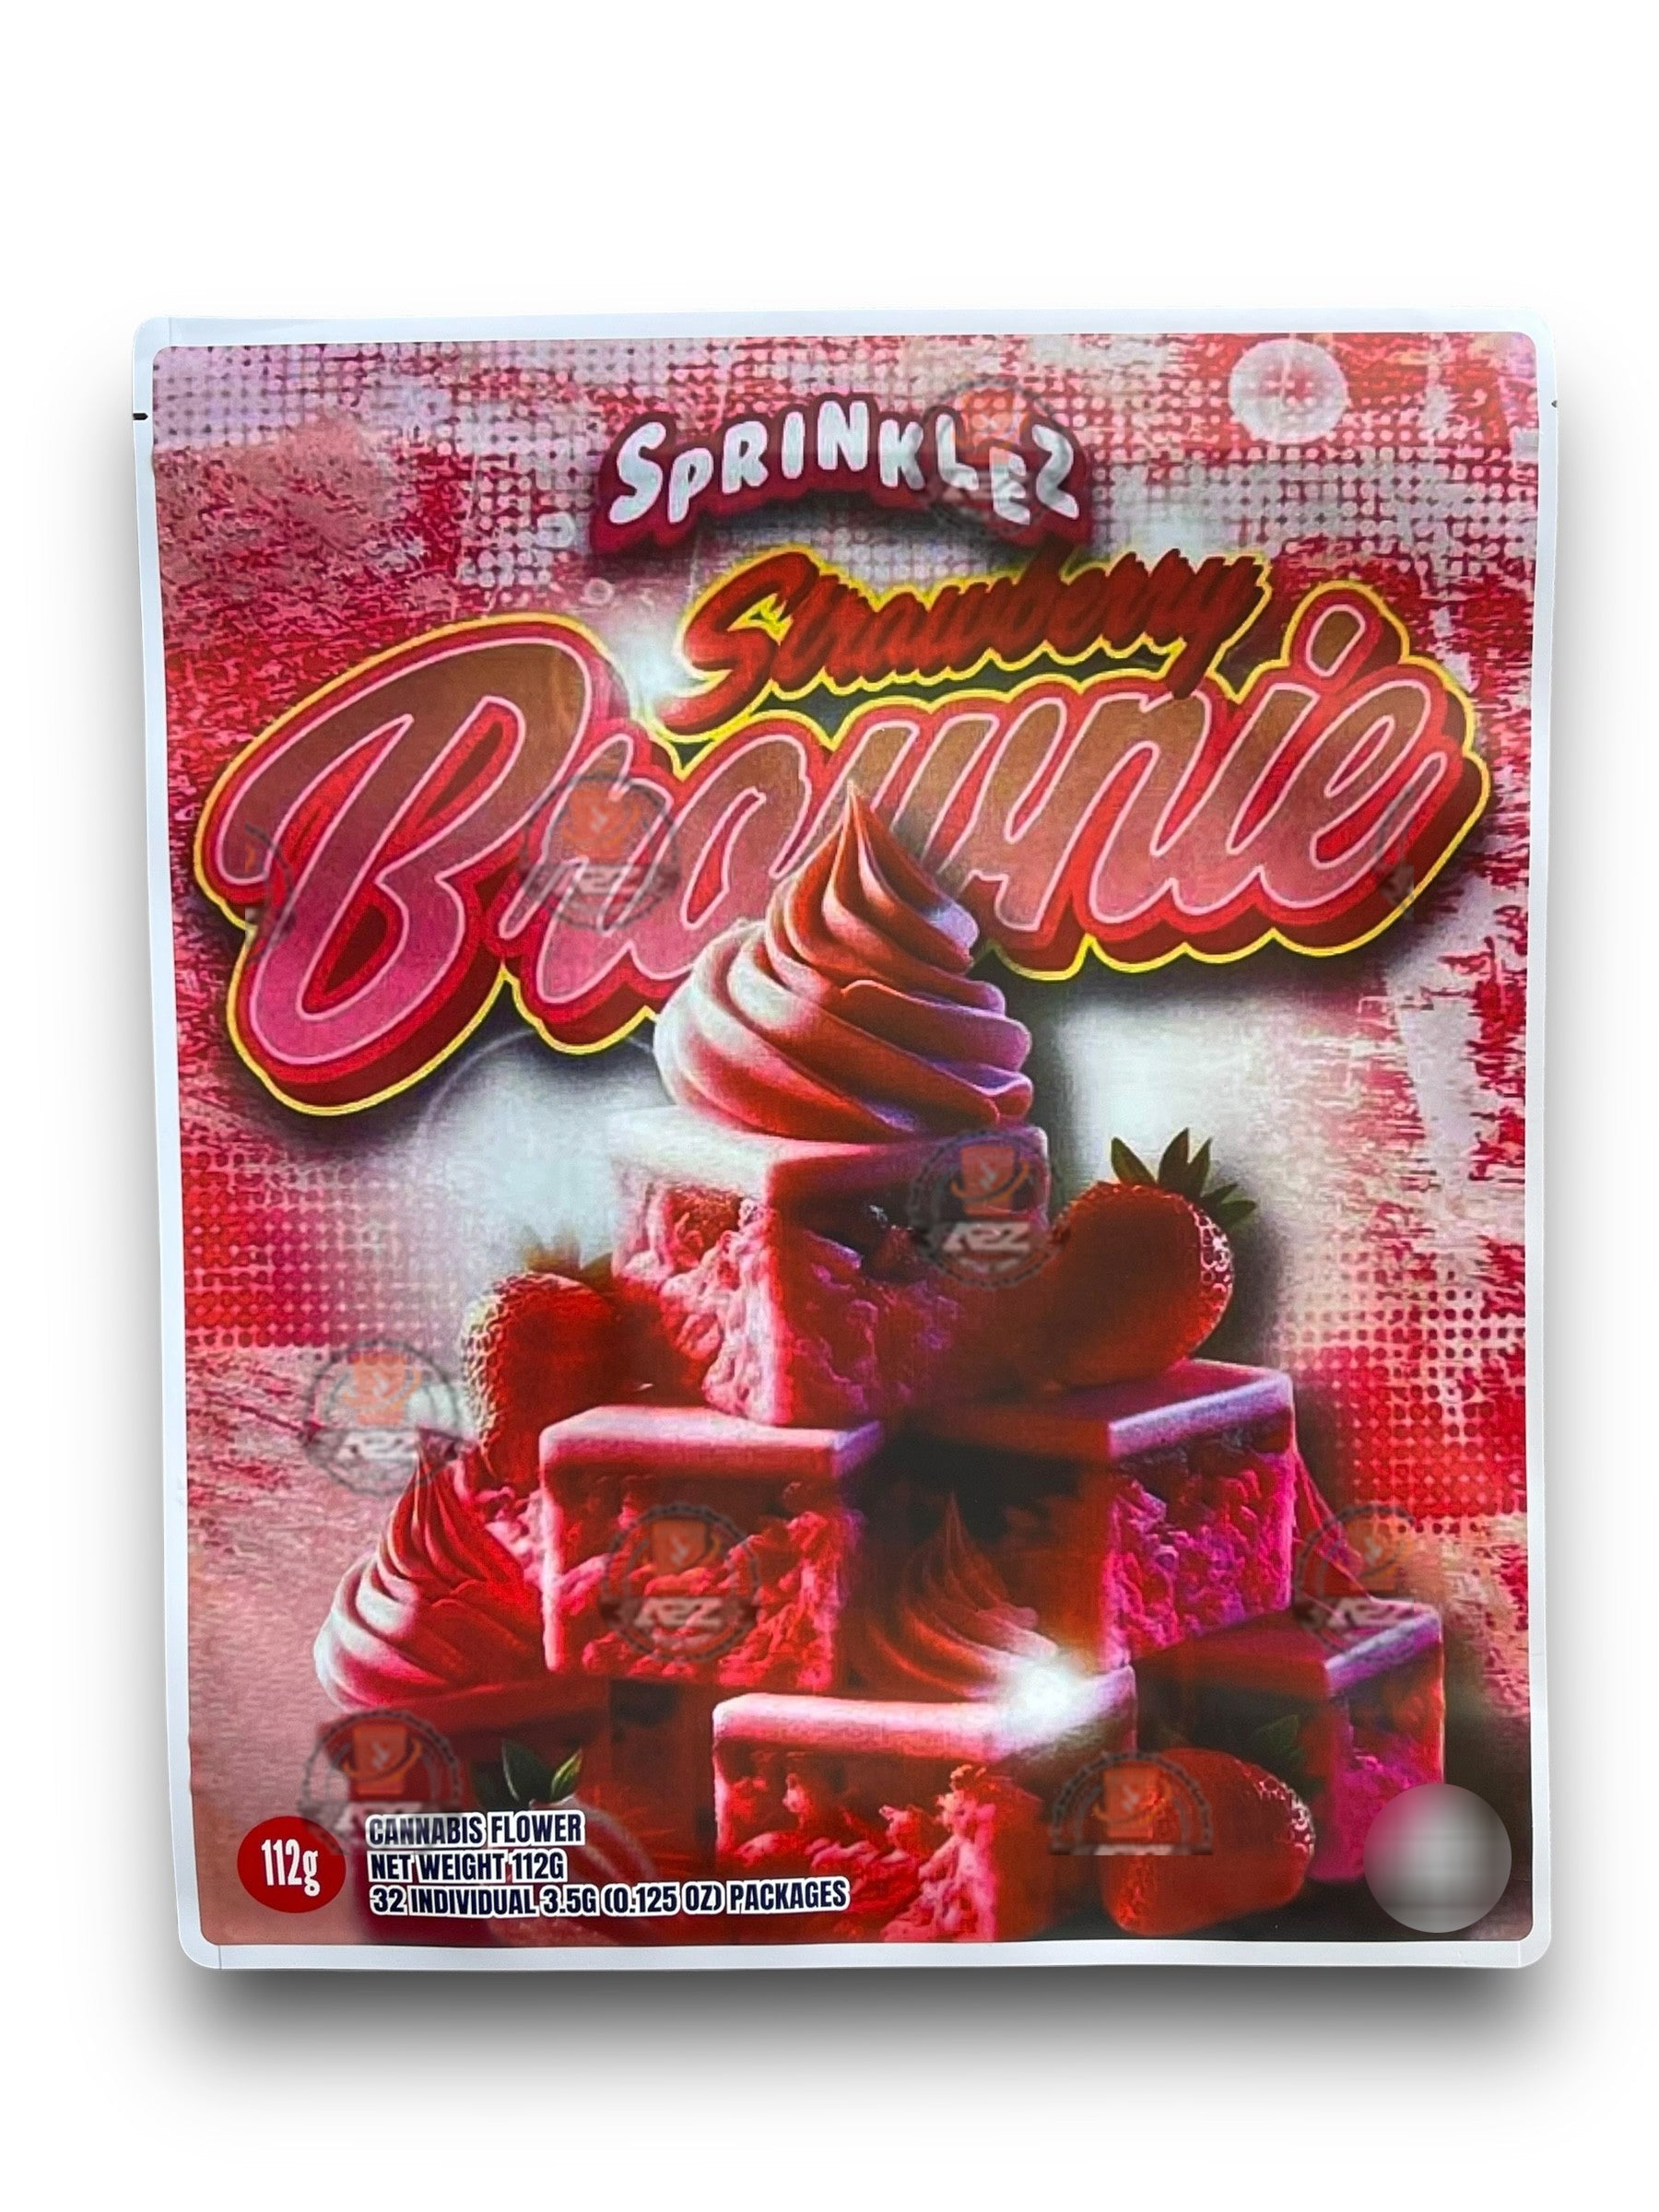 Sprinklez Strawberry Brownie 1 Pound Mylar Bag Net Weight 112G Packaging Only